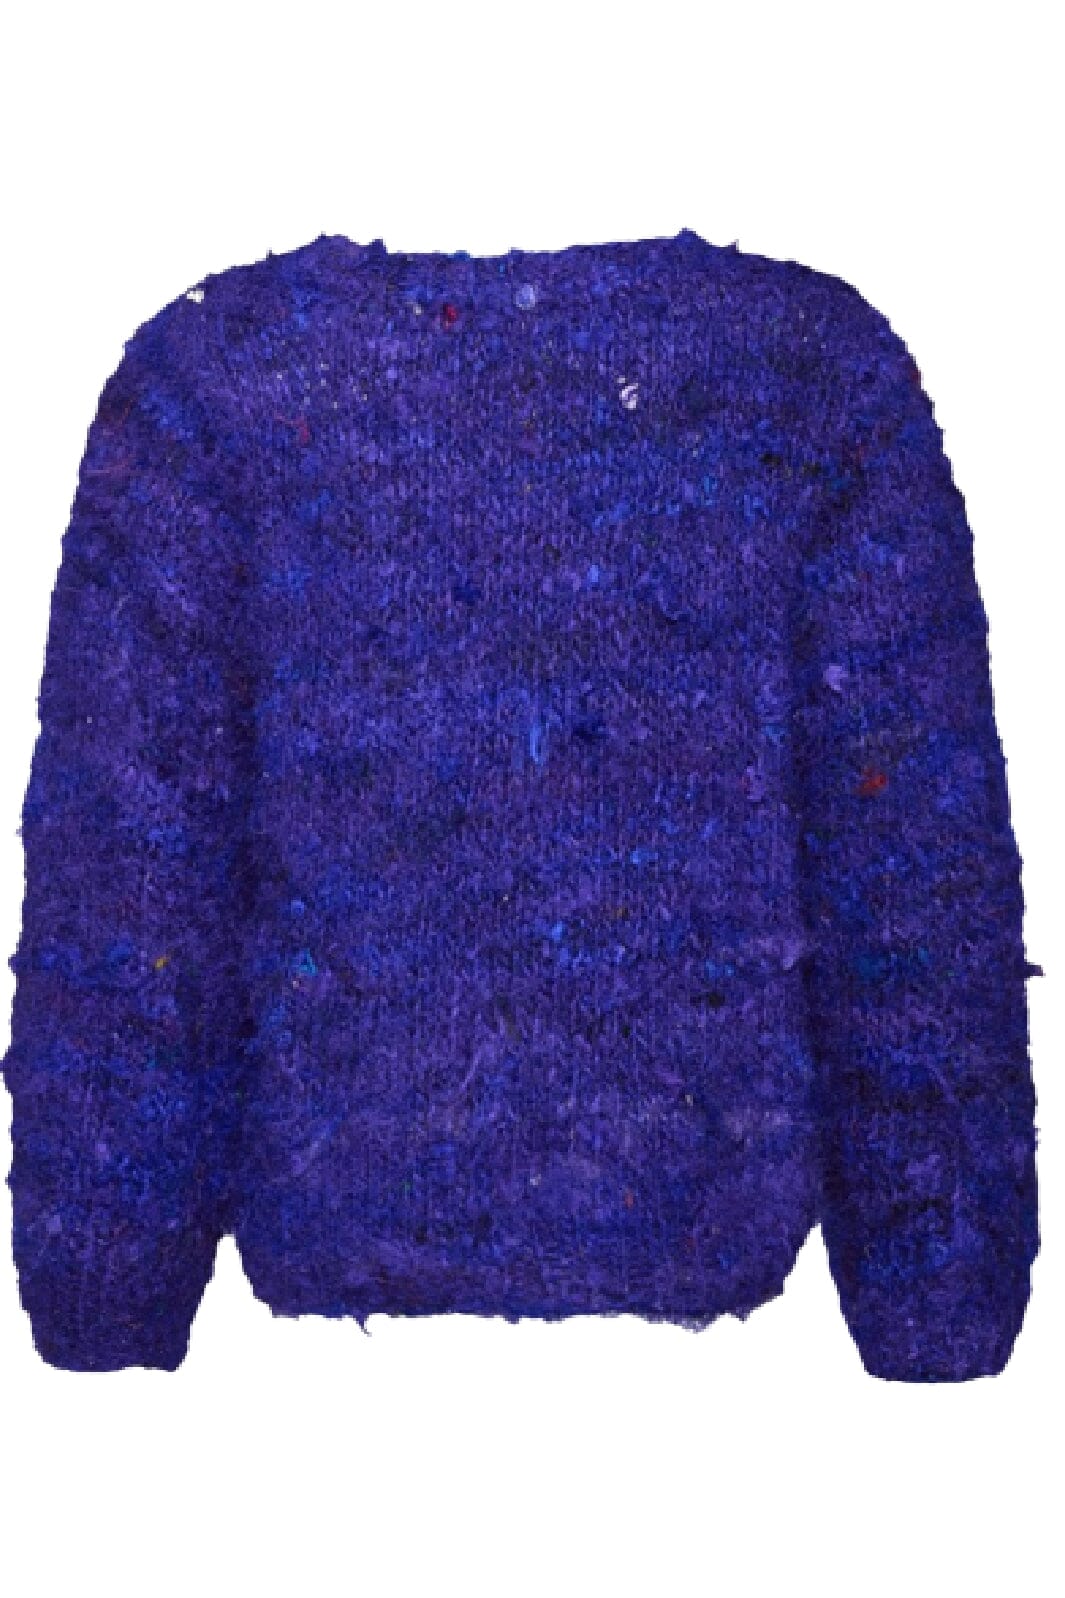 Sissel Edelbo - Kira Sari SILK Knit Cardigan - Royal Blue Melange Cardigans 